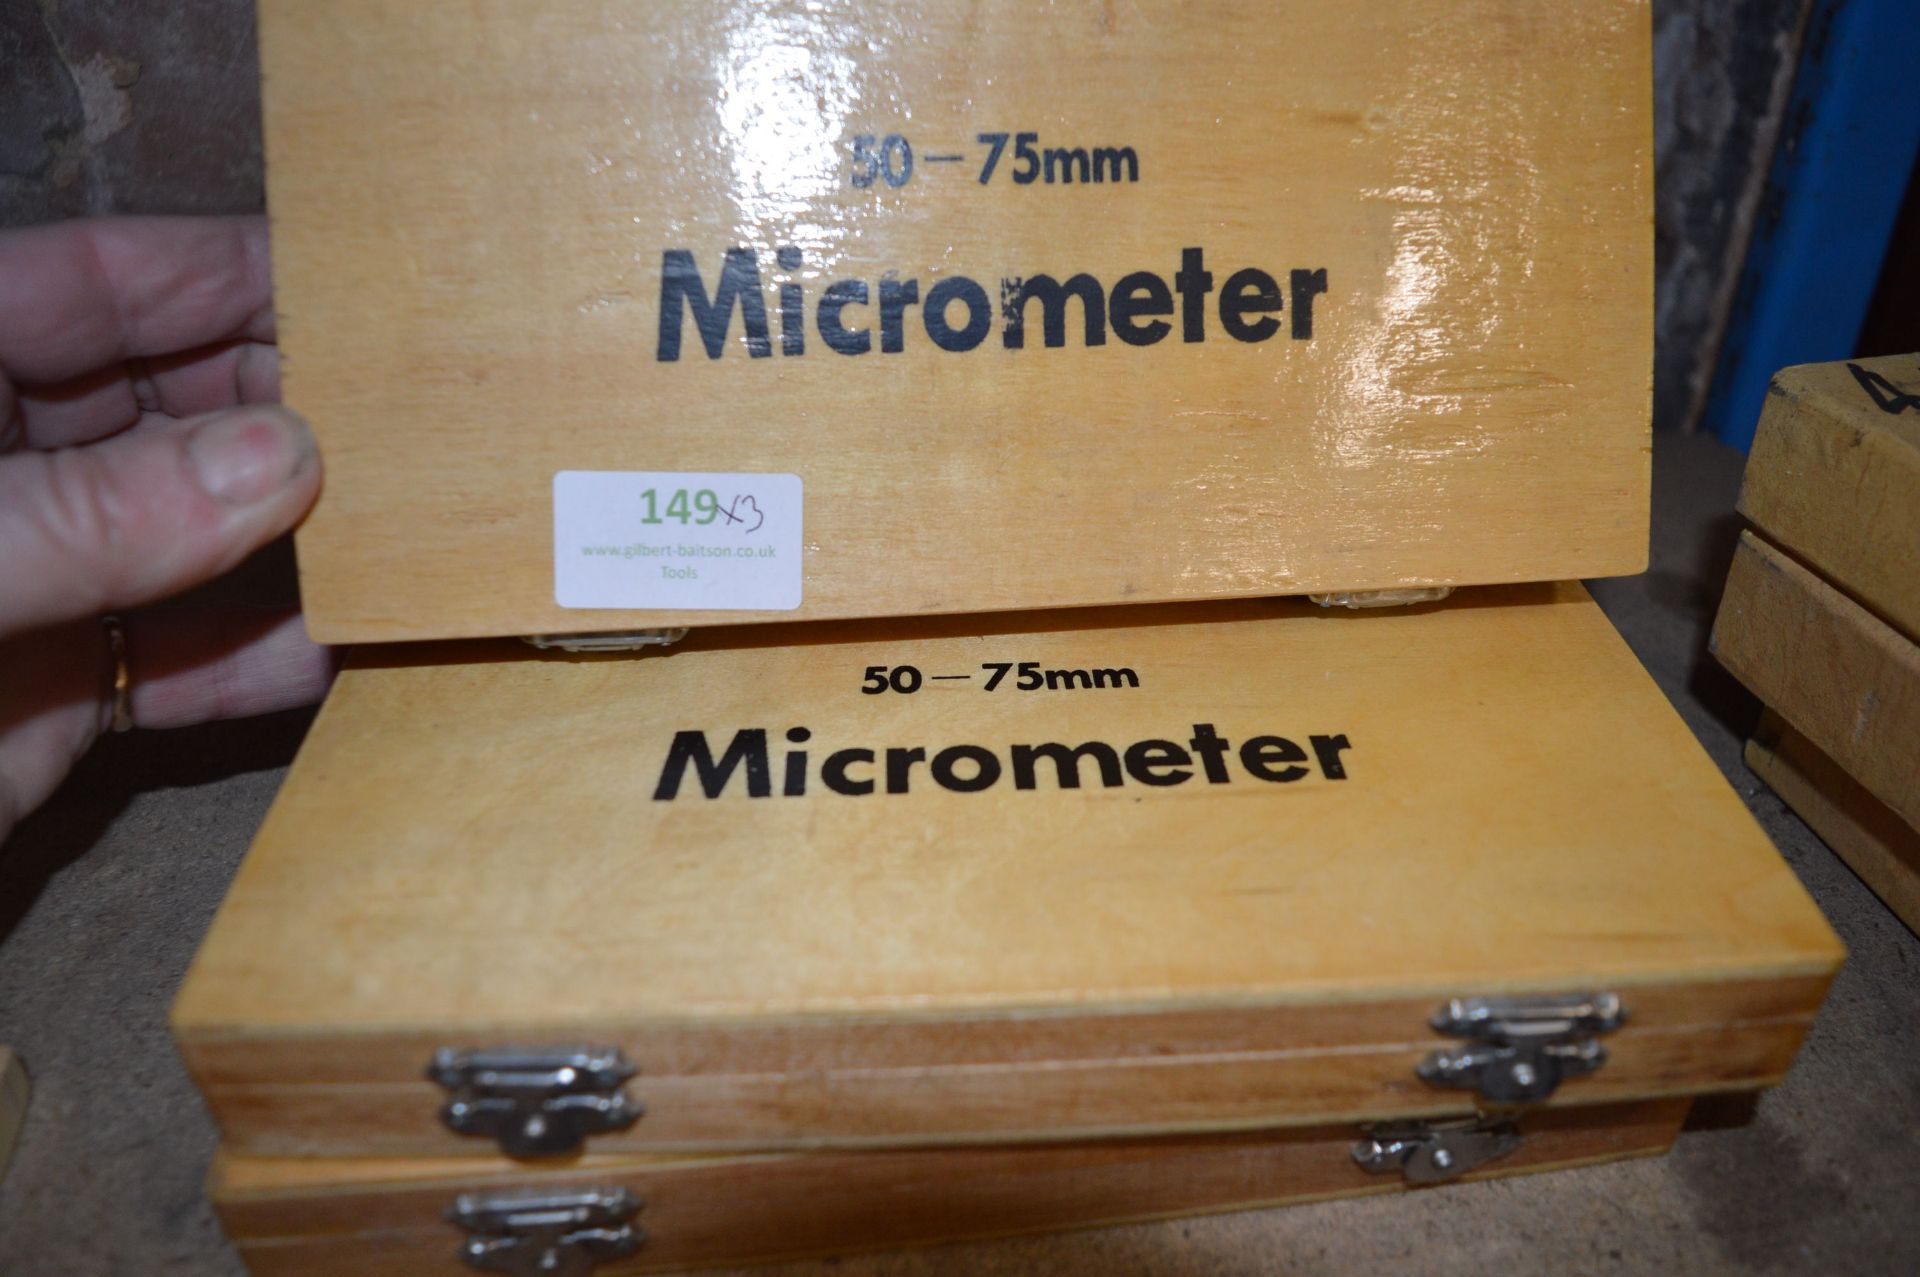 Three 50-75mm Micrometers